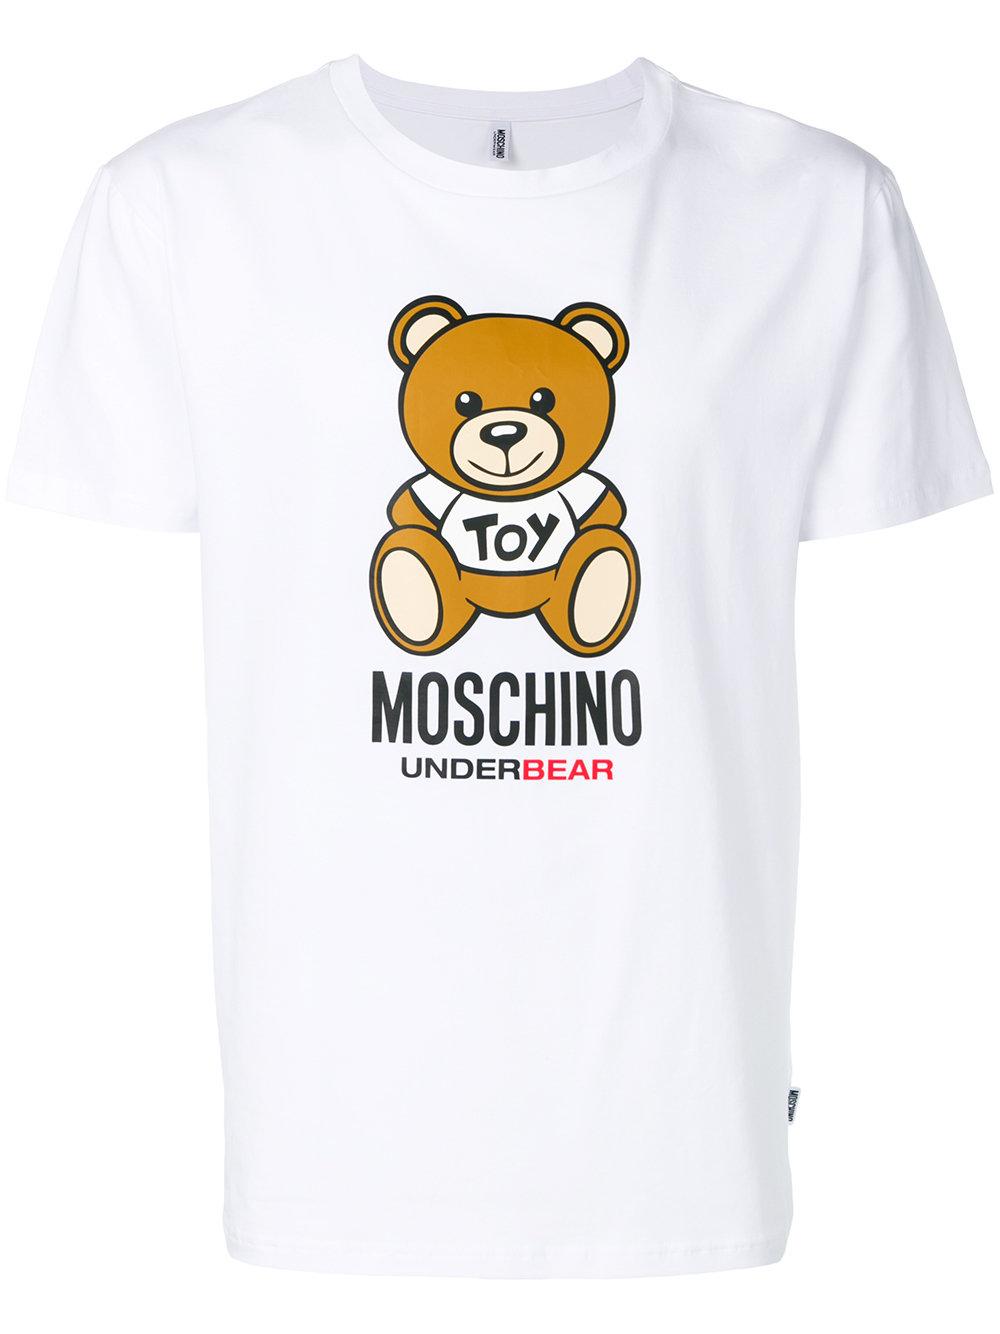 moschino underbear t shirt